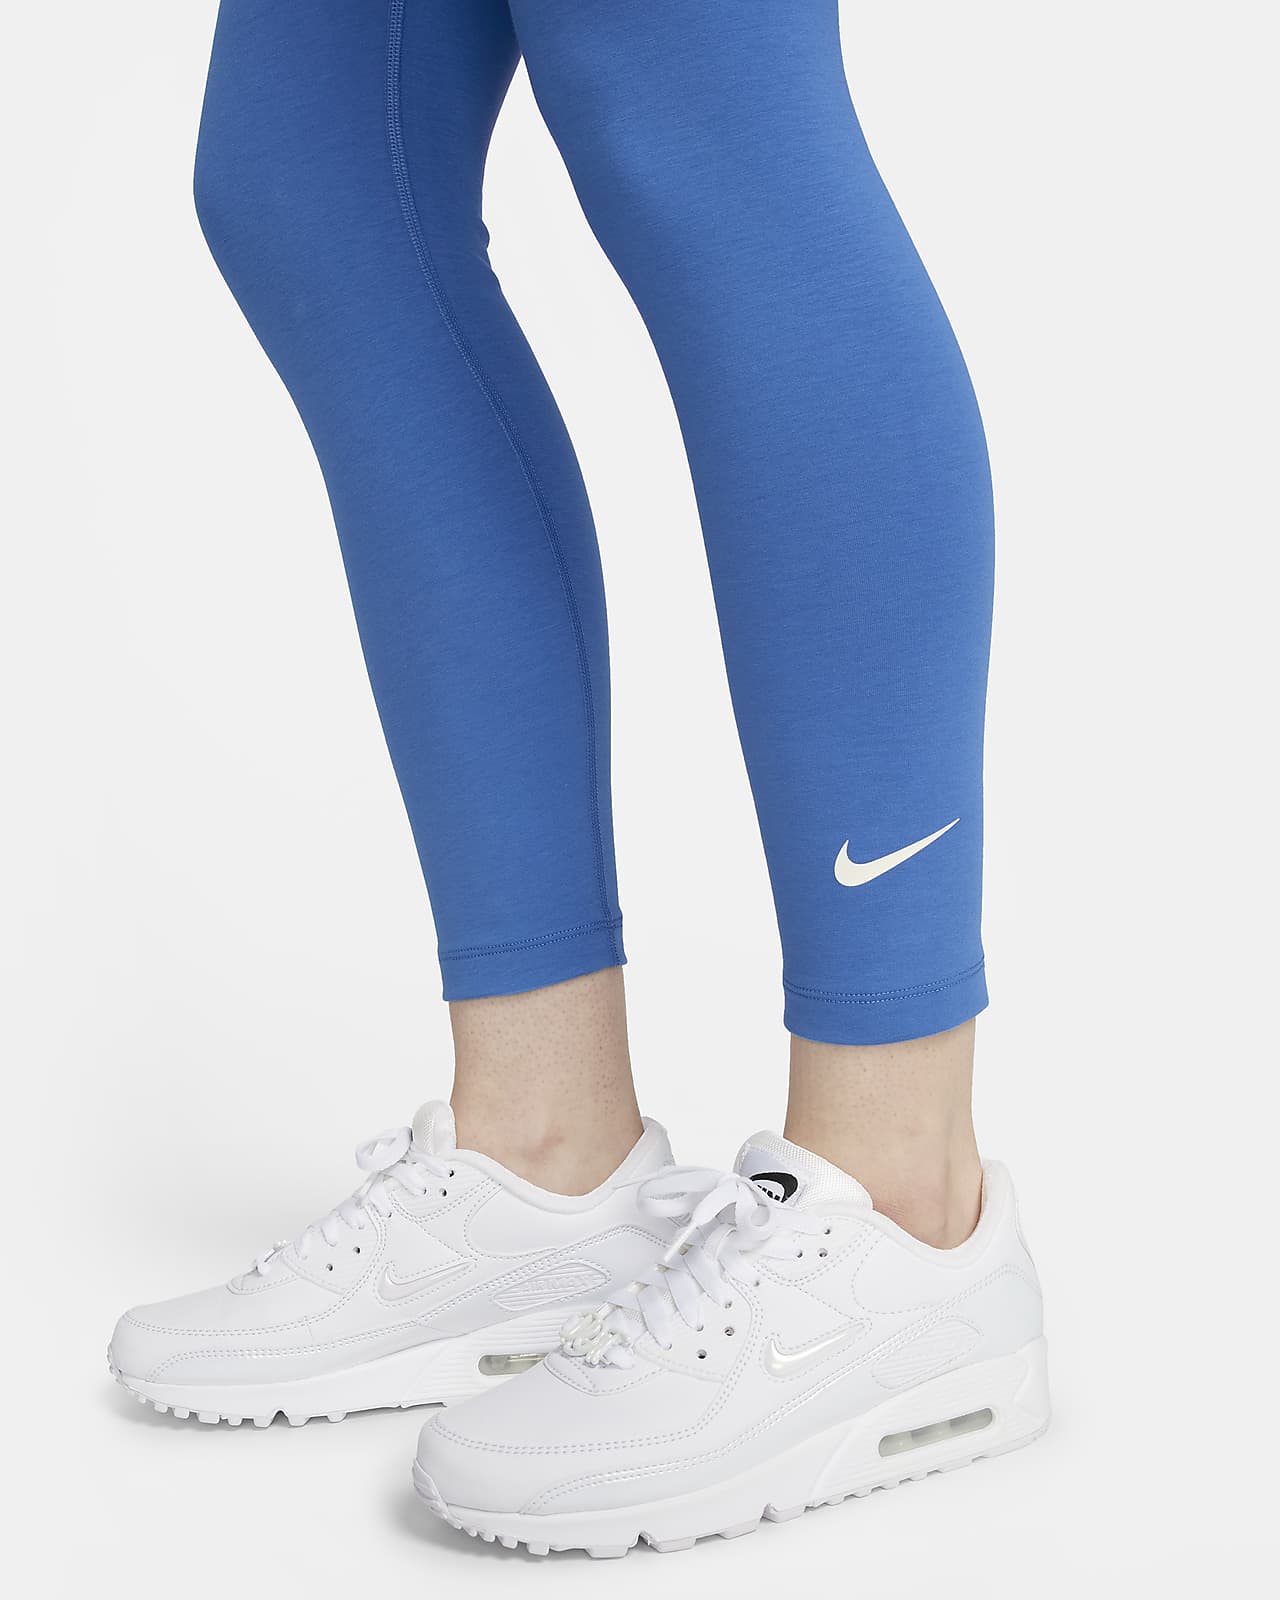 Women's Legging Nike sportswear essential - Nike - Brands - Lifestyle